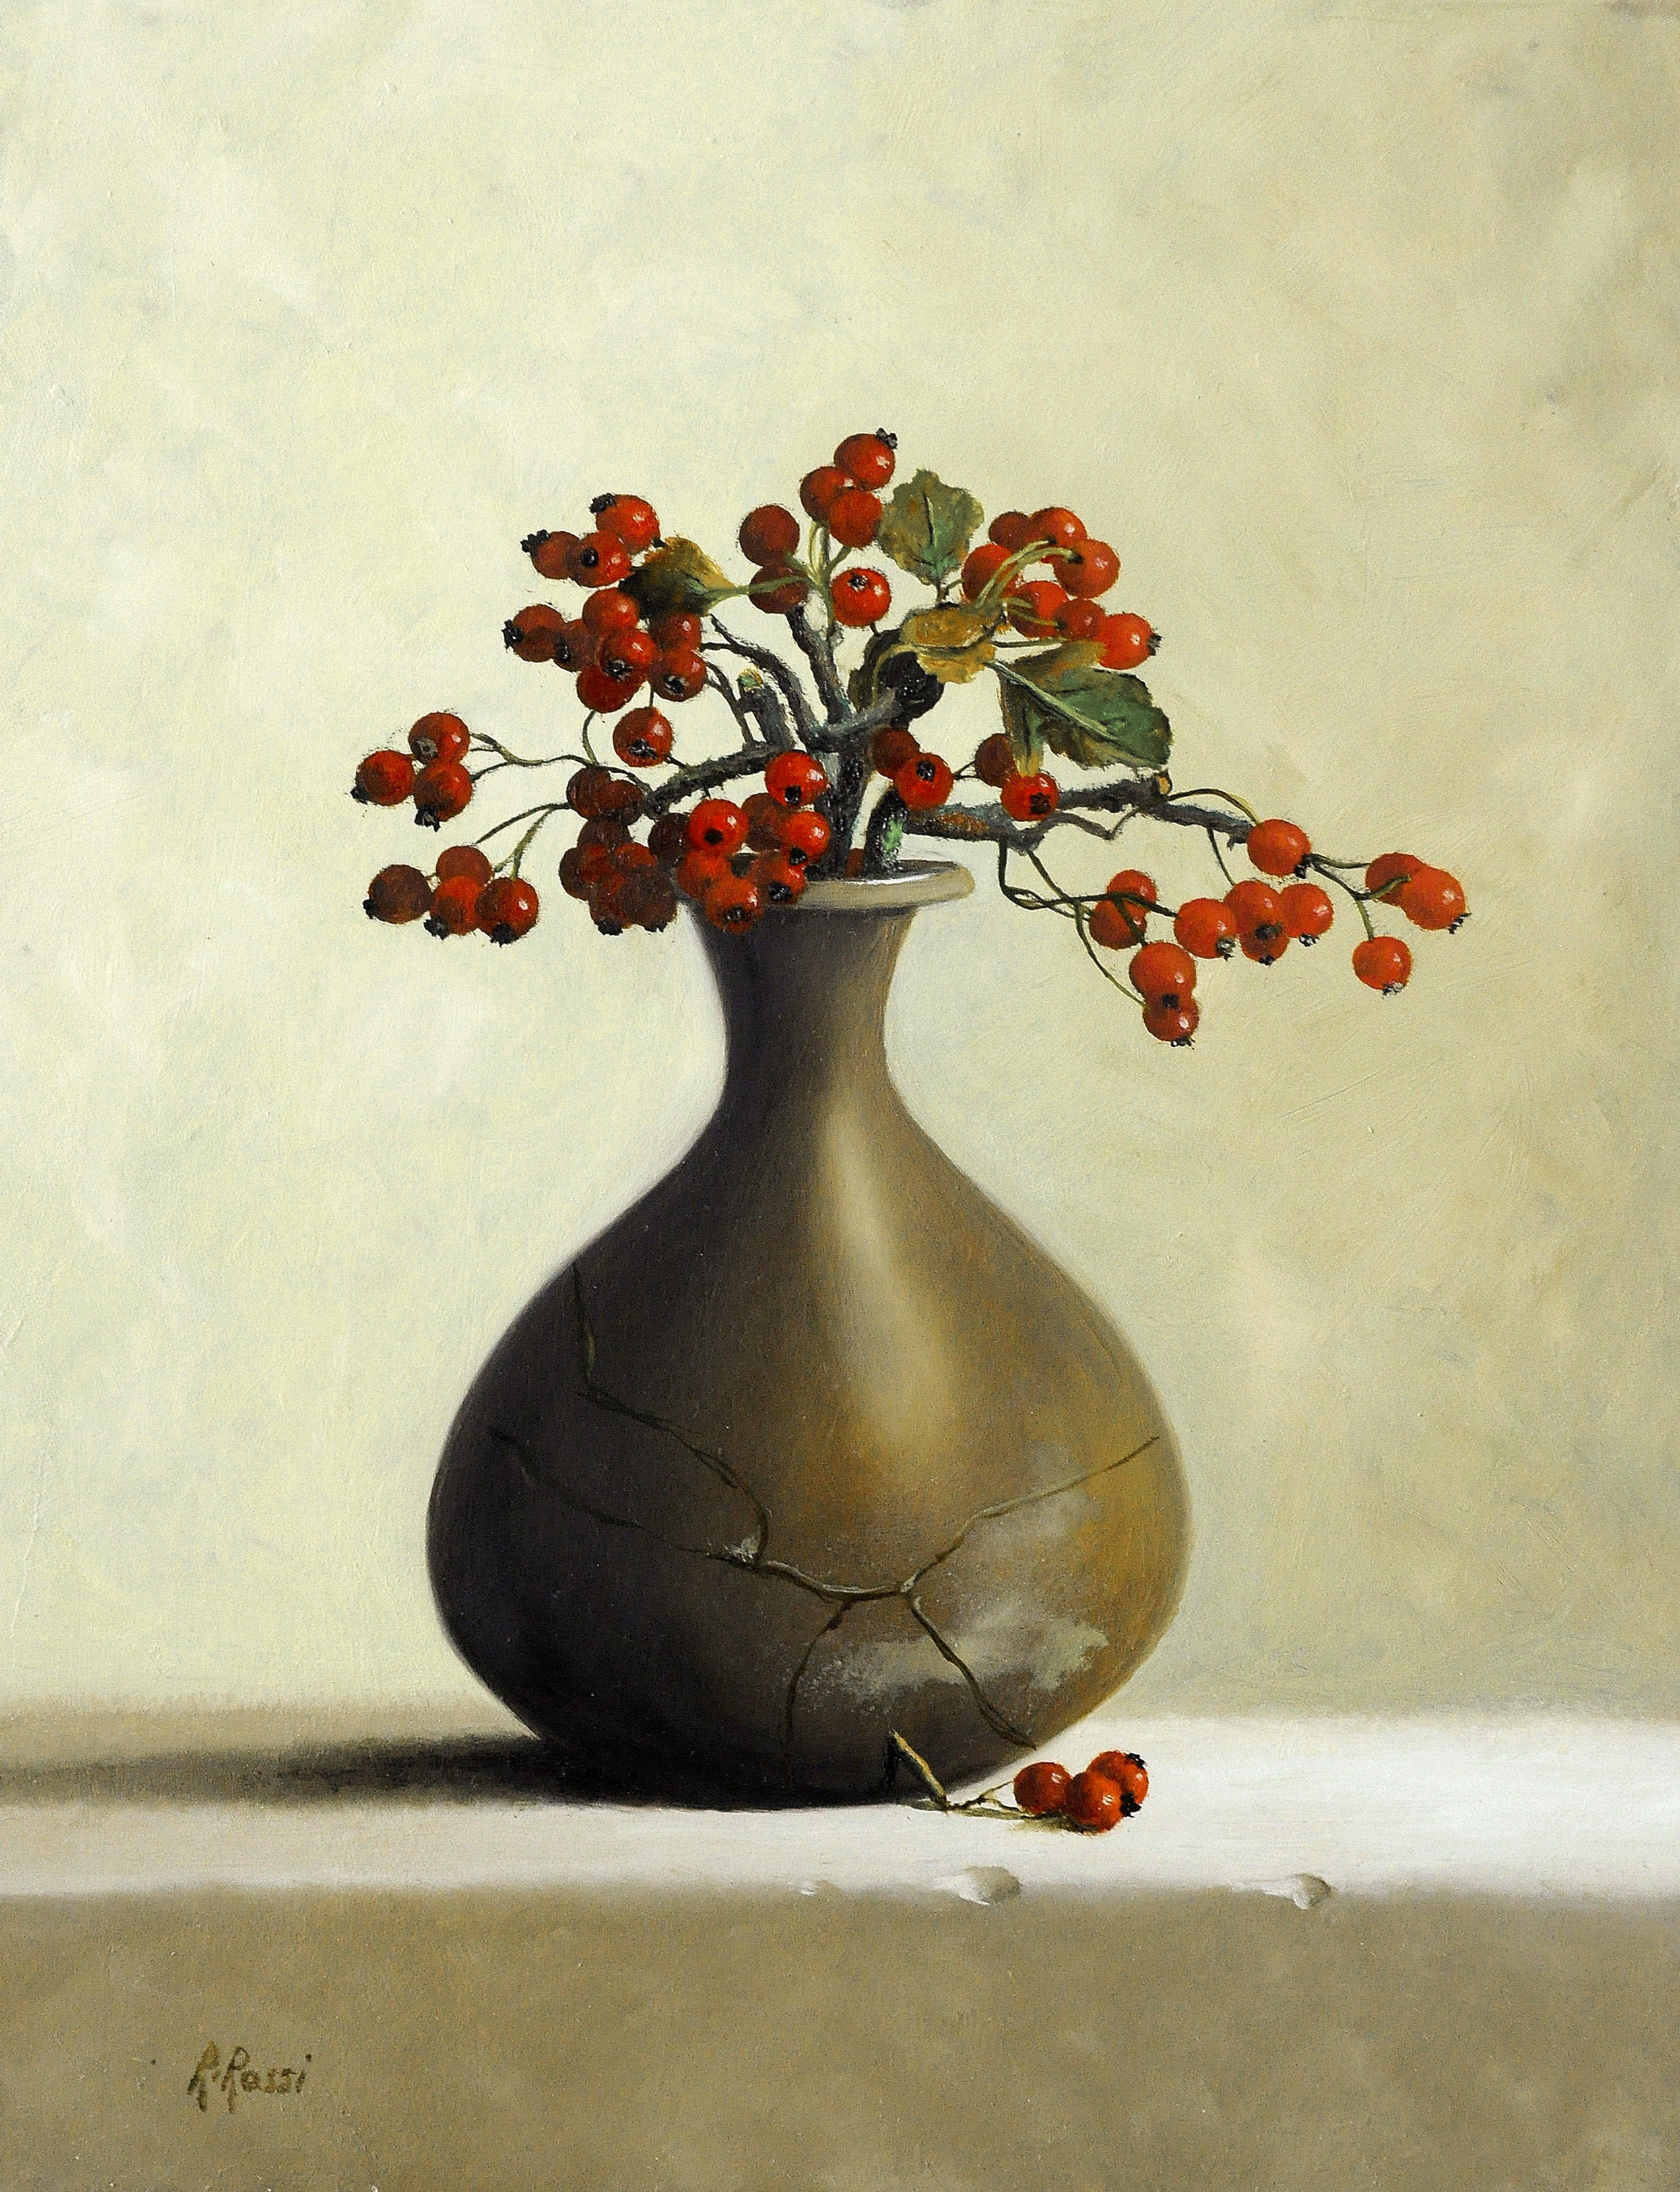 2013 roberta rossi – vaso etrusco biancospino – olio su tela – 24 x 18